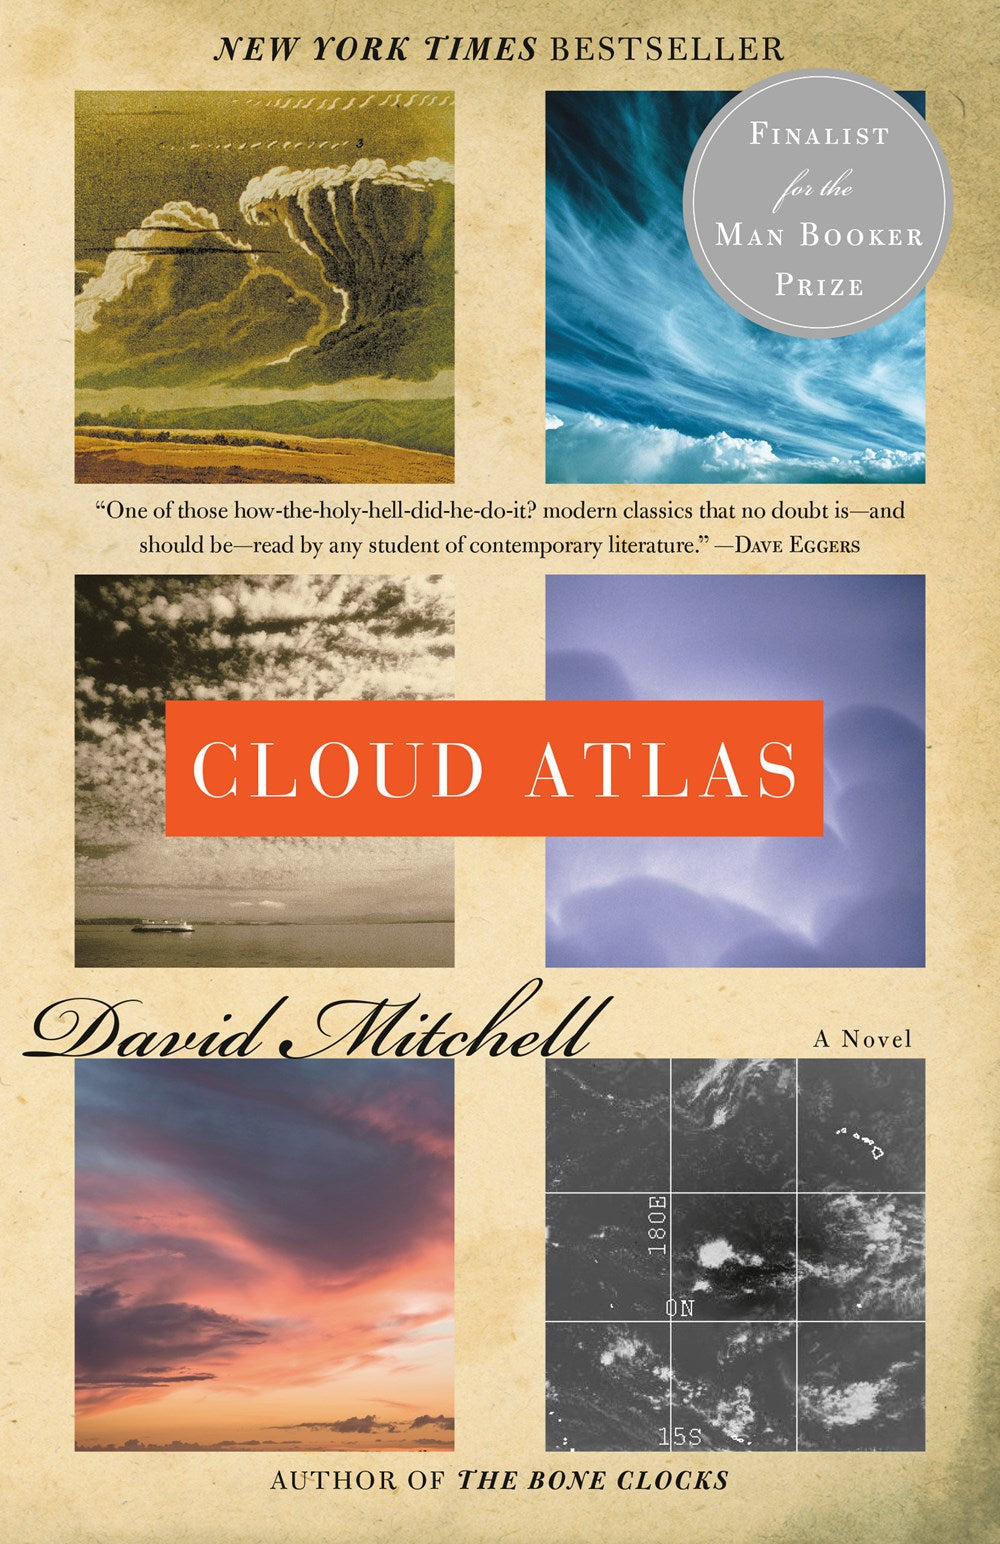 Cloud Atlas: A Novel by David Mitchell